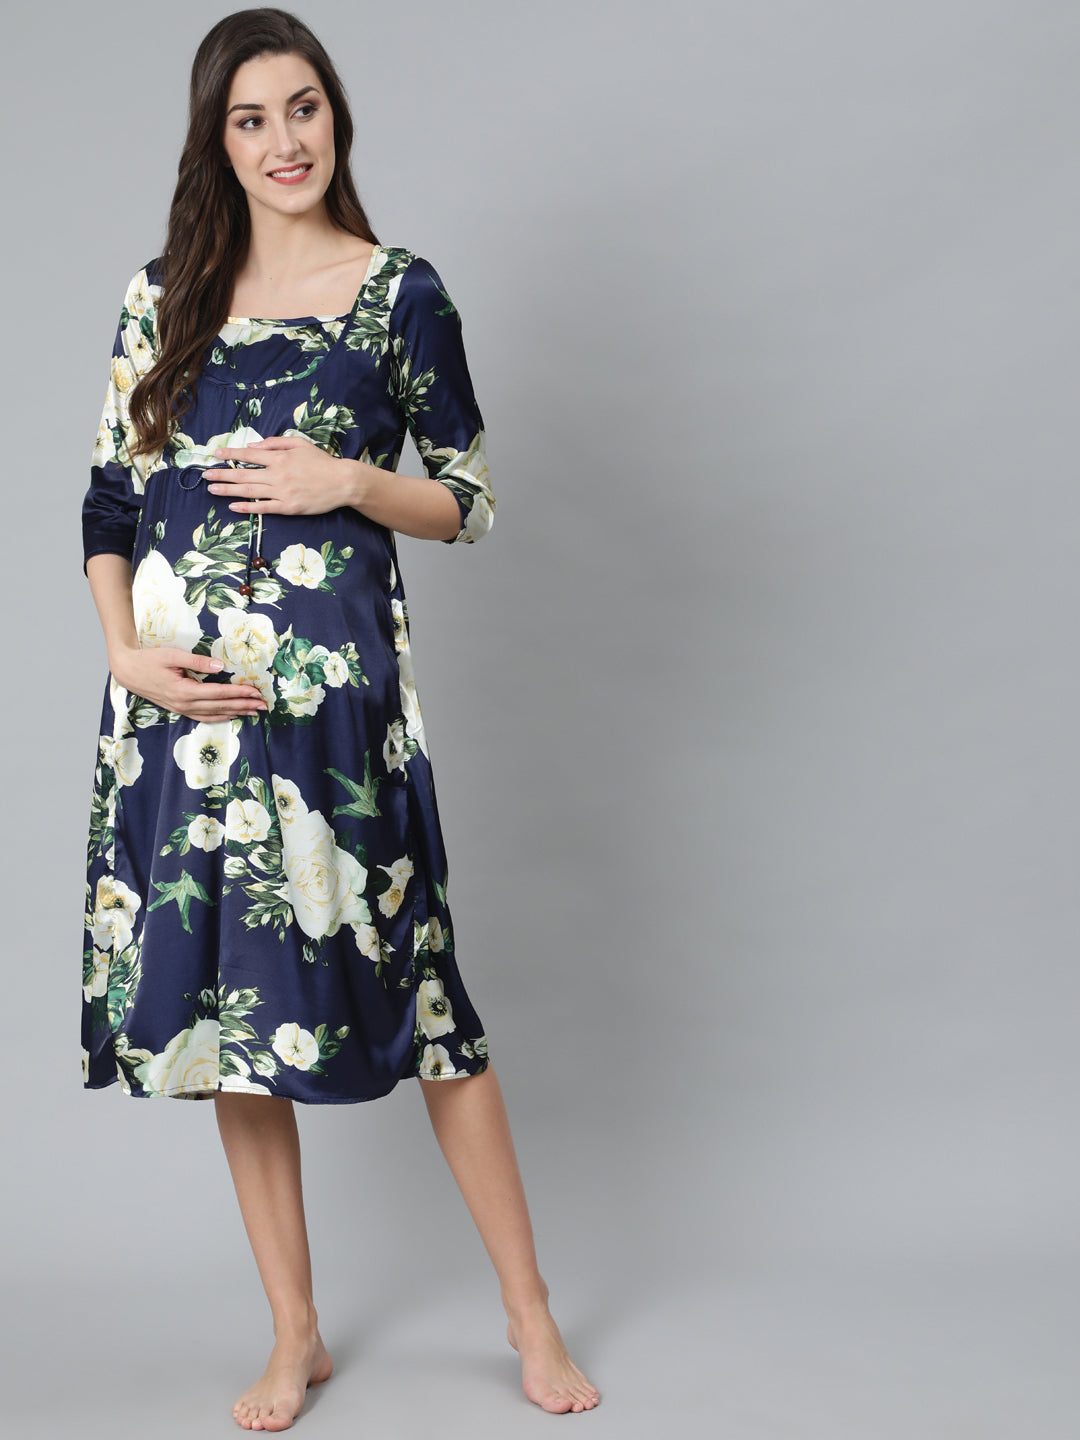 Women's Navy Blue Floral Print Maternity Dress - Aks